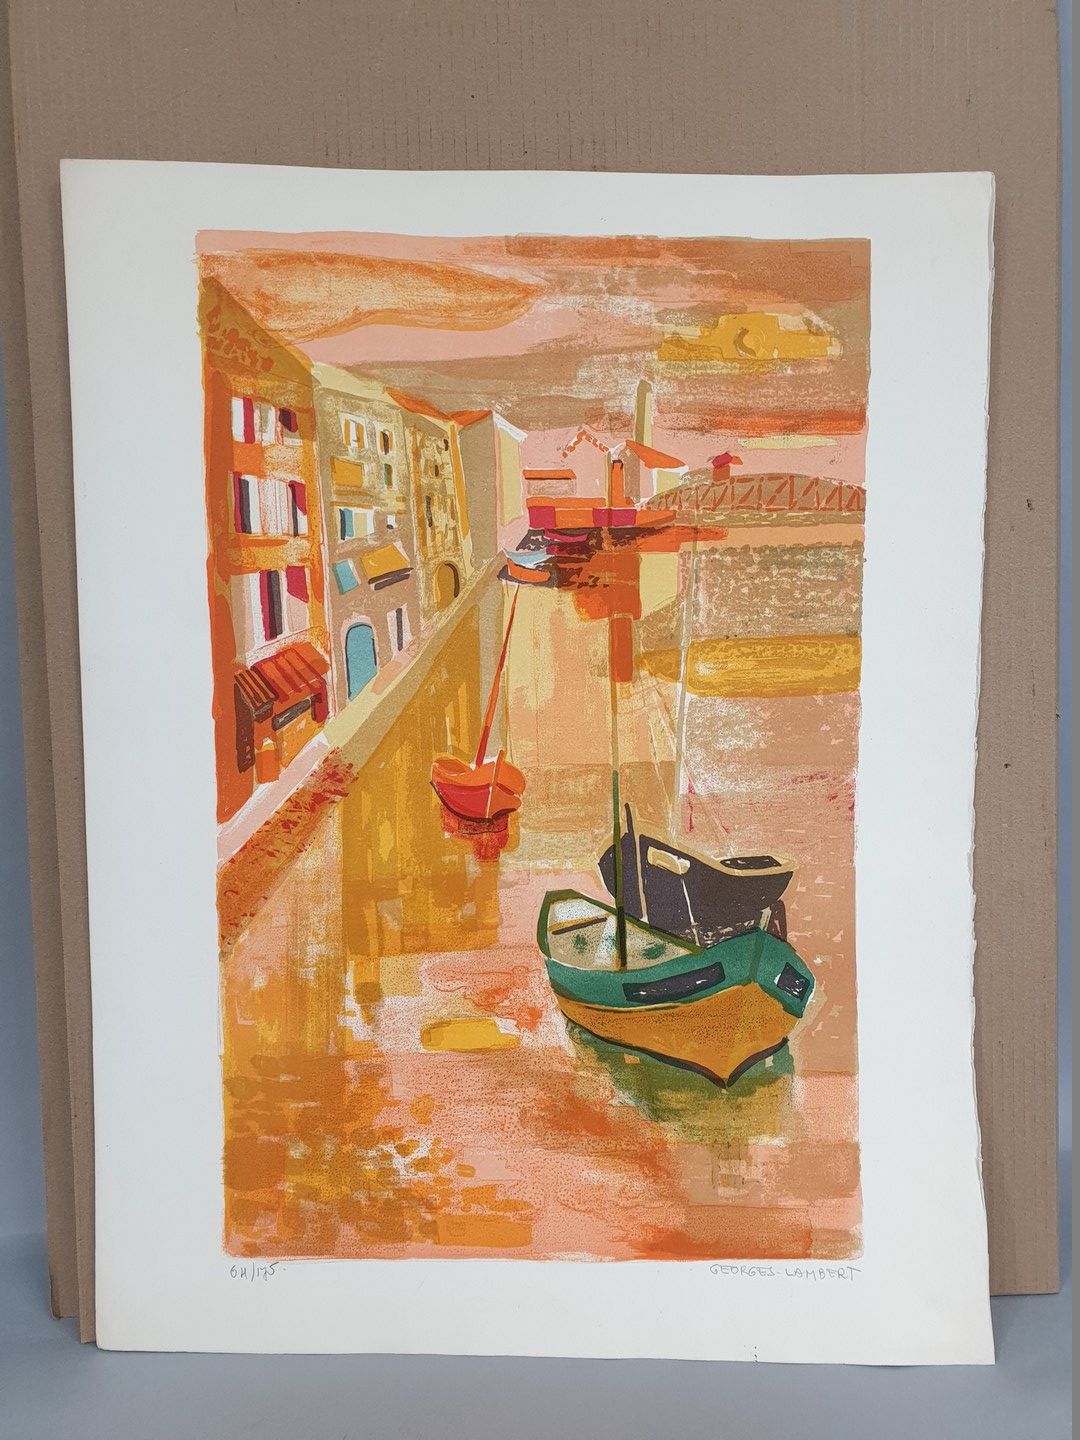 Null LAMBERT Georges (1919-1998)

Barcos de vela

Litografía (ensuciada), firmad&hellip;